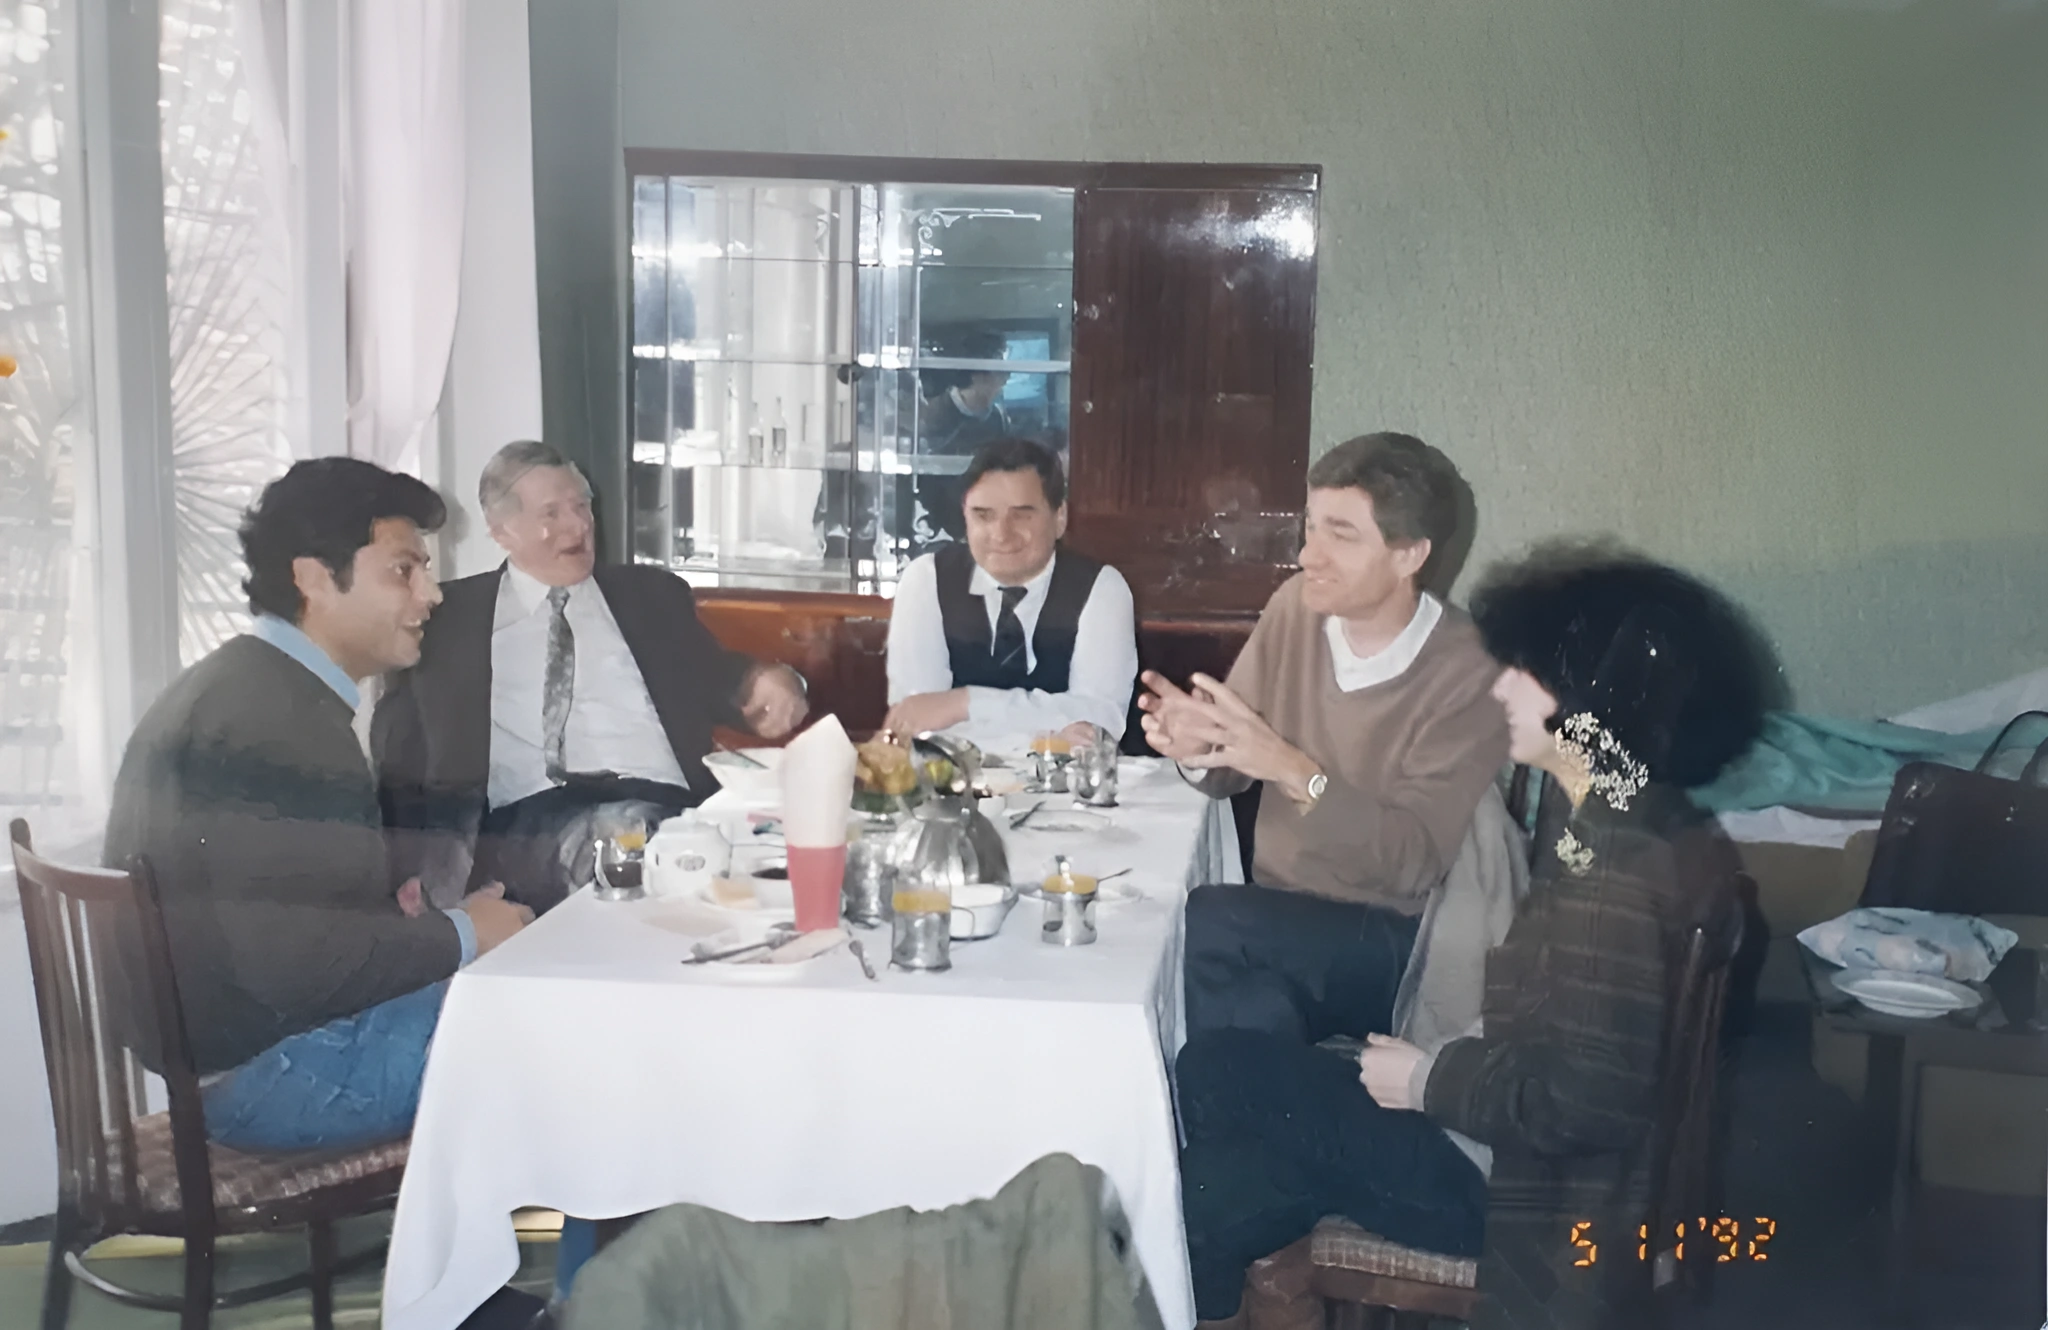 From left to right: Alvaro Pinto Scholtbach, Lord David Ennals, Linnart Mäll, Michael van Walt, Liana Kvarchelia. Abkhazia 1992.